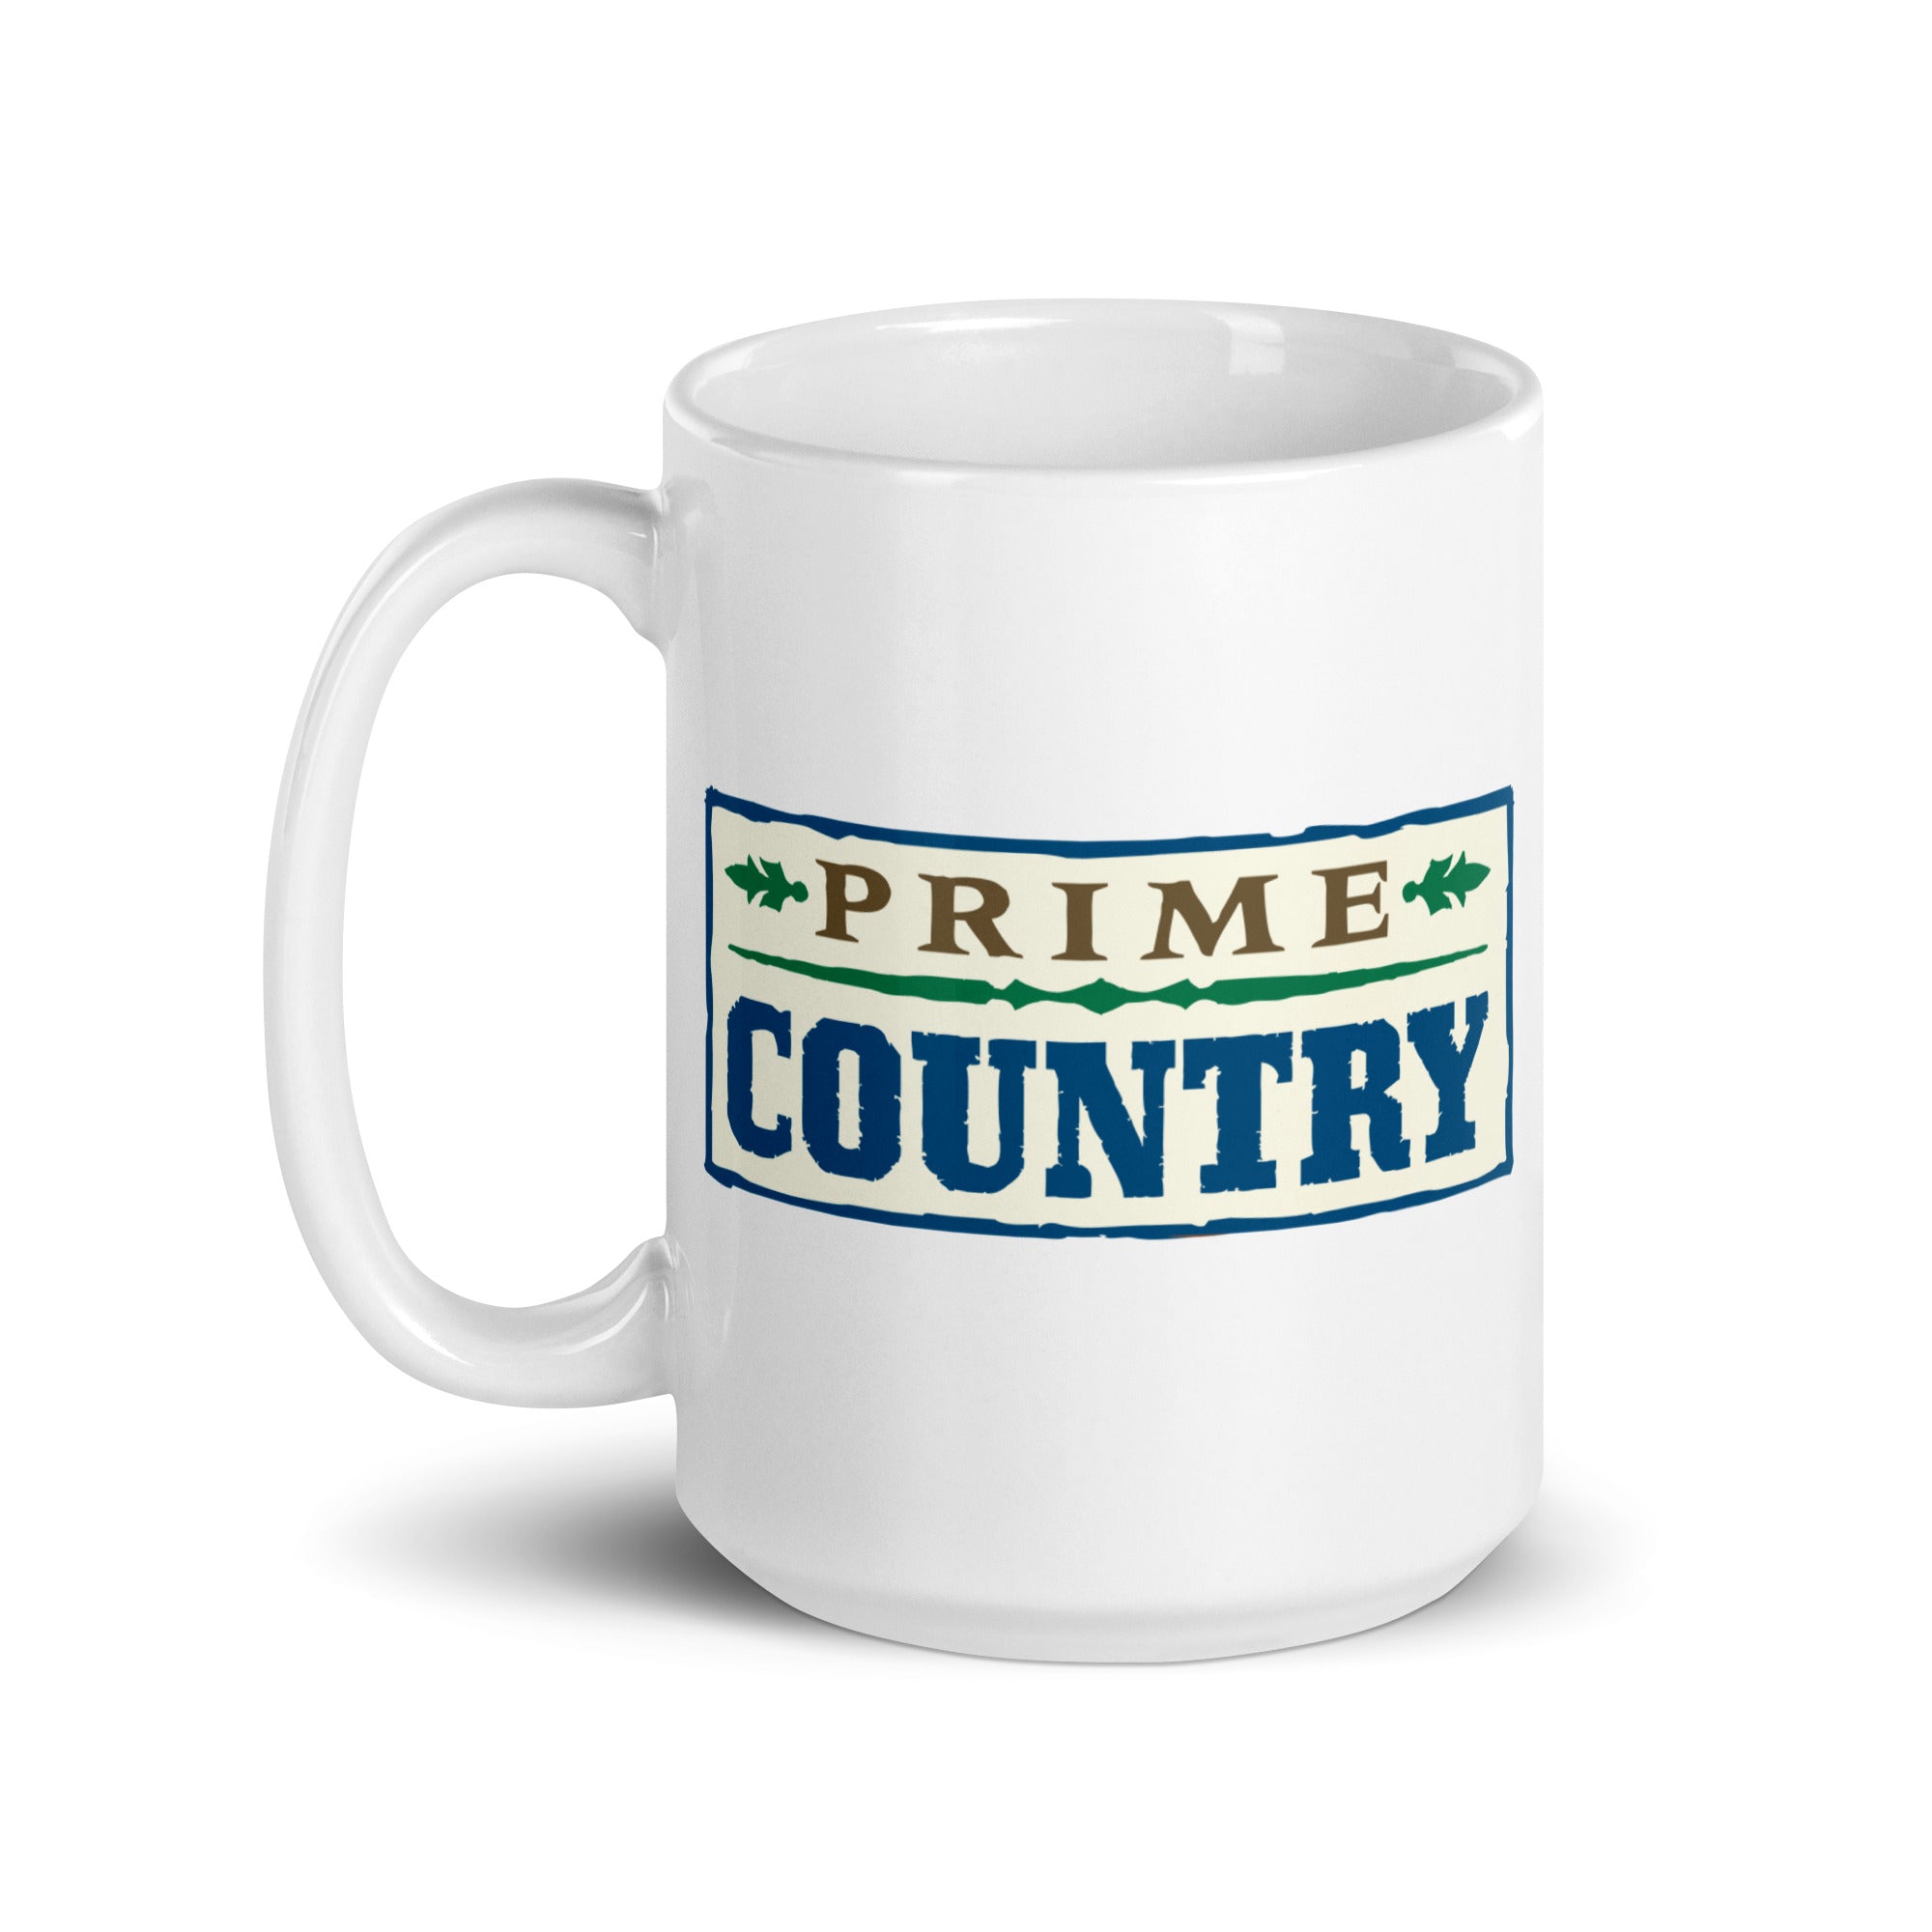 Prime Country: Mug